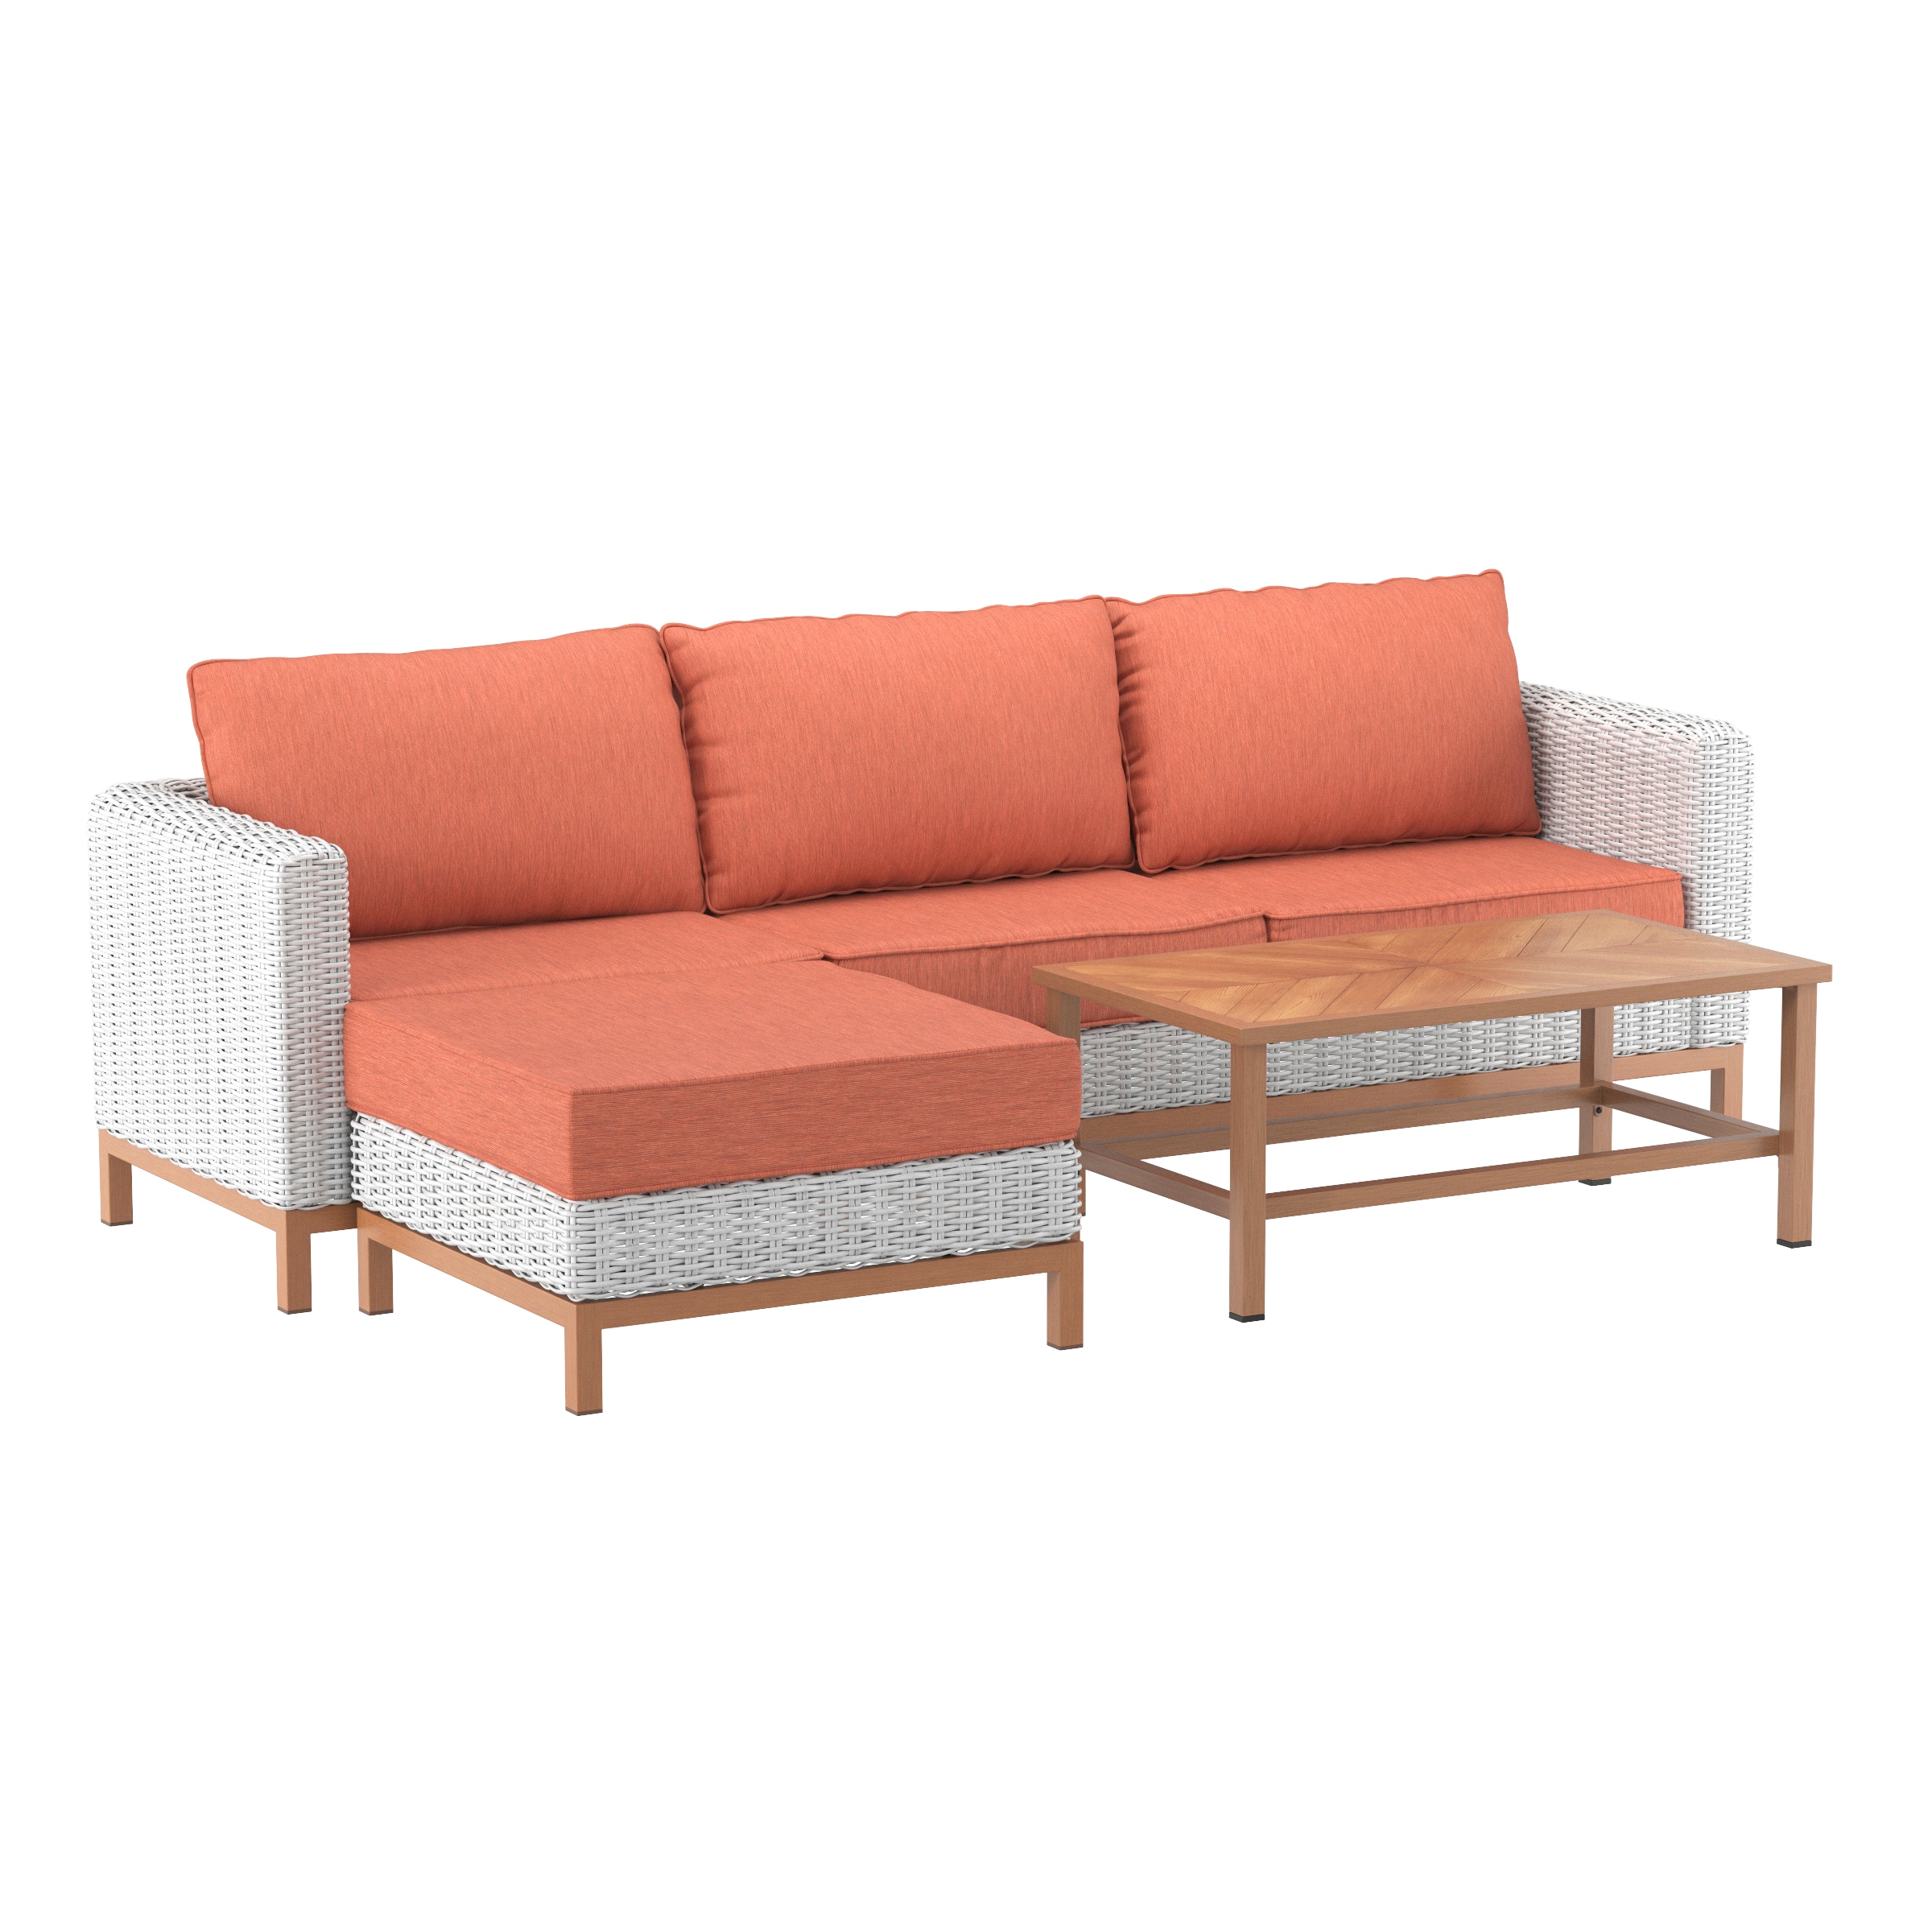 Veda Springs 4-Piece Woven Patio Conversation Set with Orange Cushions | - Origin 21 LG-21169-4PCC